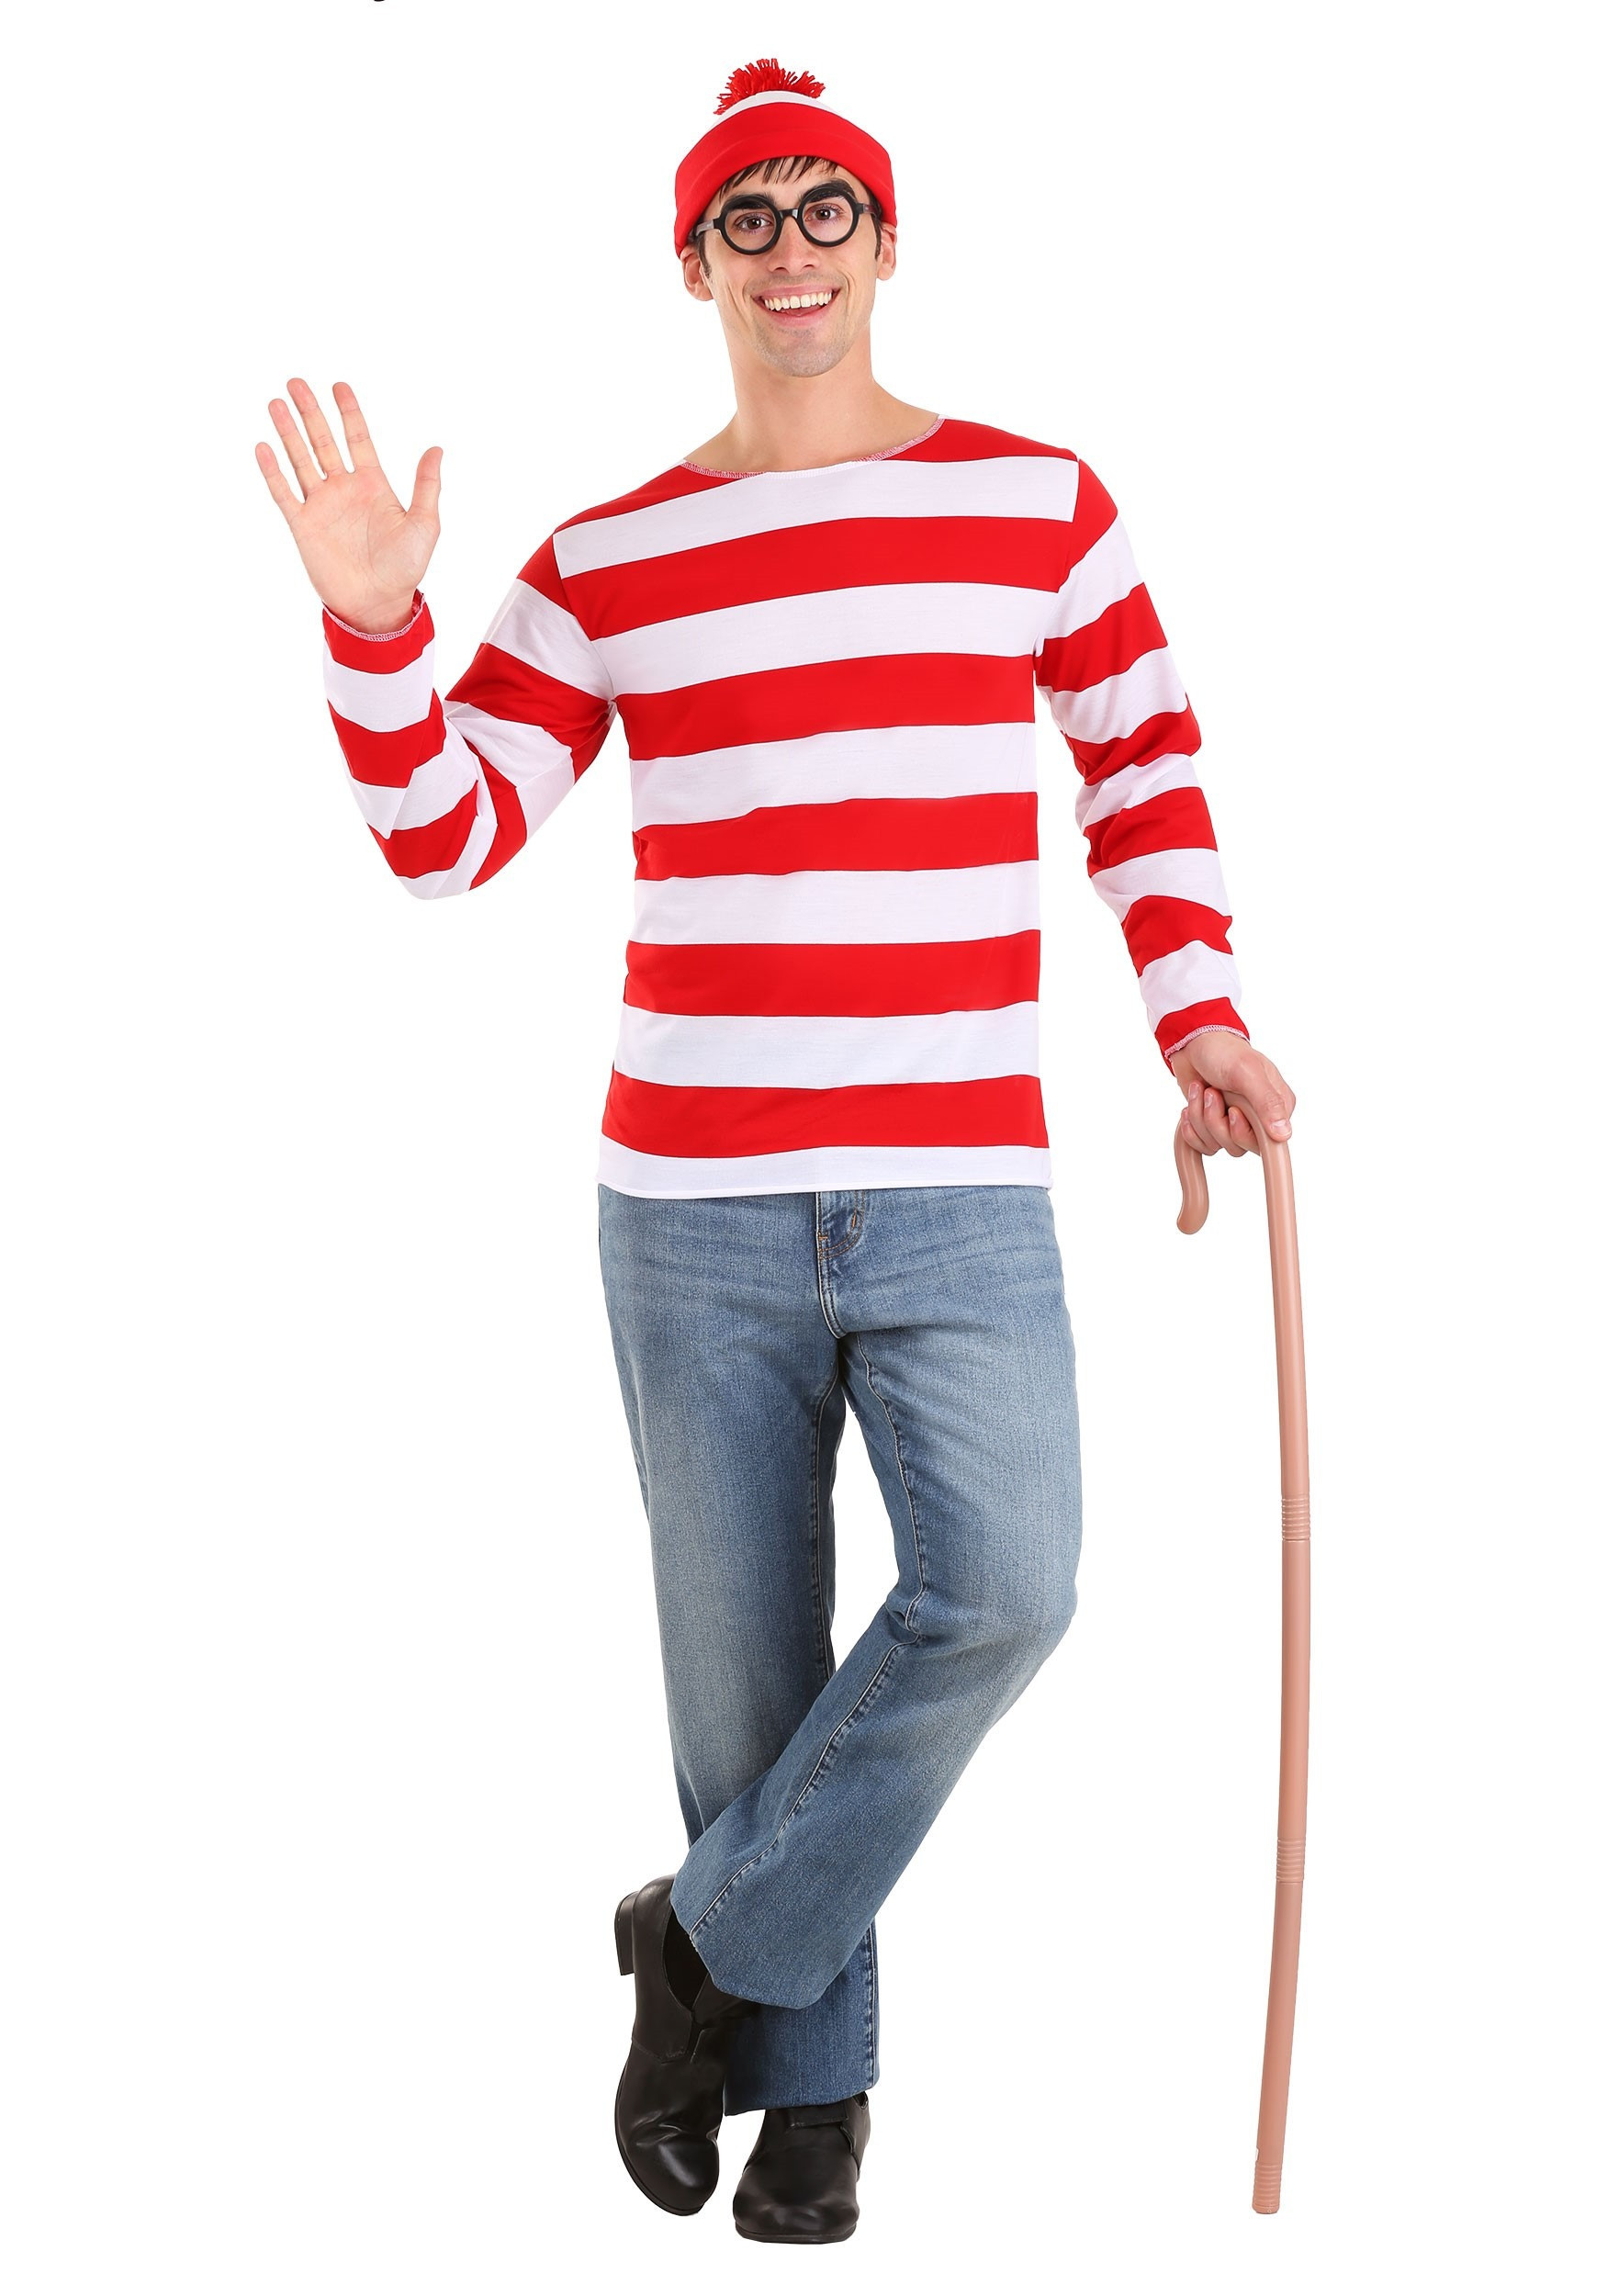 Easy DIY Costumes For Guys
 Where’s Waldo Costume